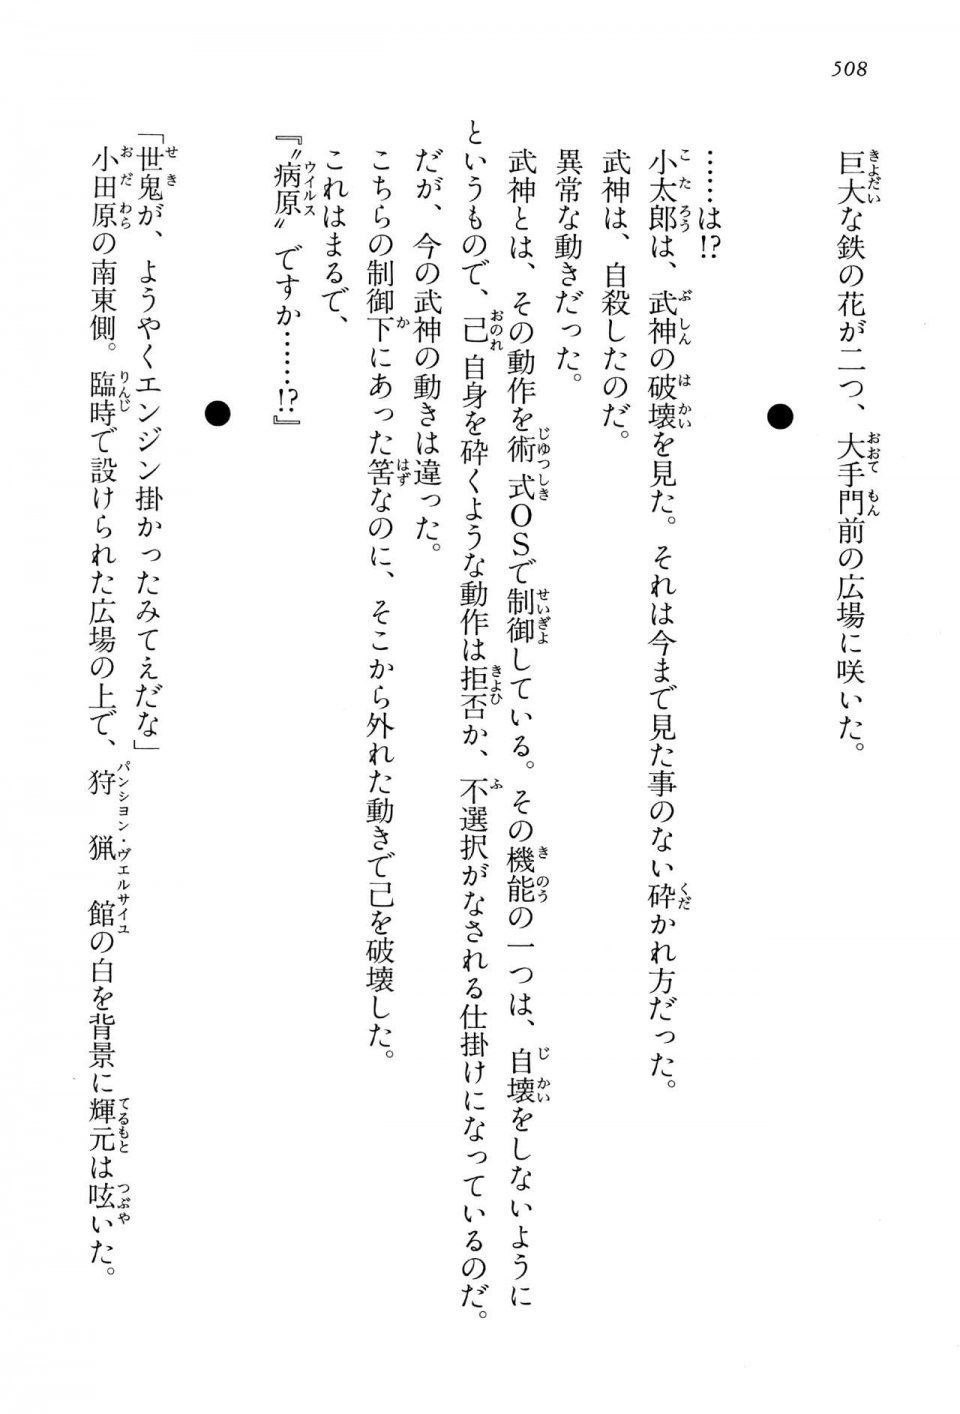 Kyoukai Senjou no Horizon LN Vol 15(6C) Part 1 - Photo #508